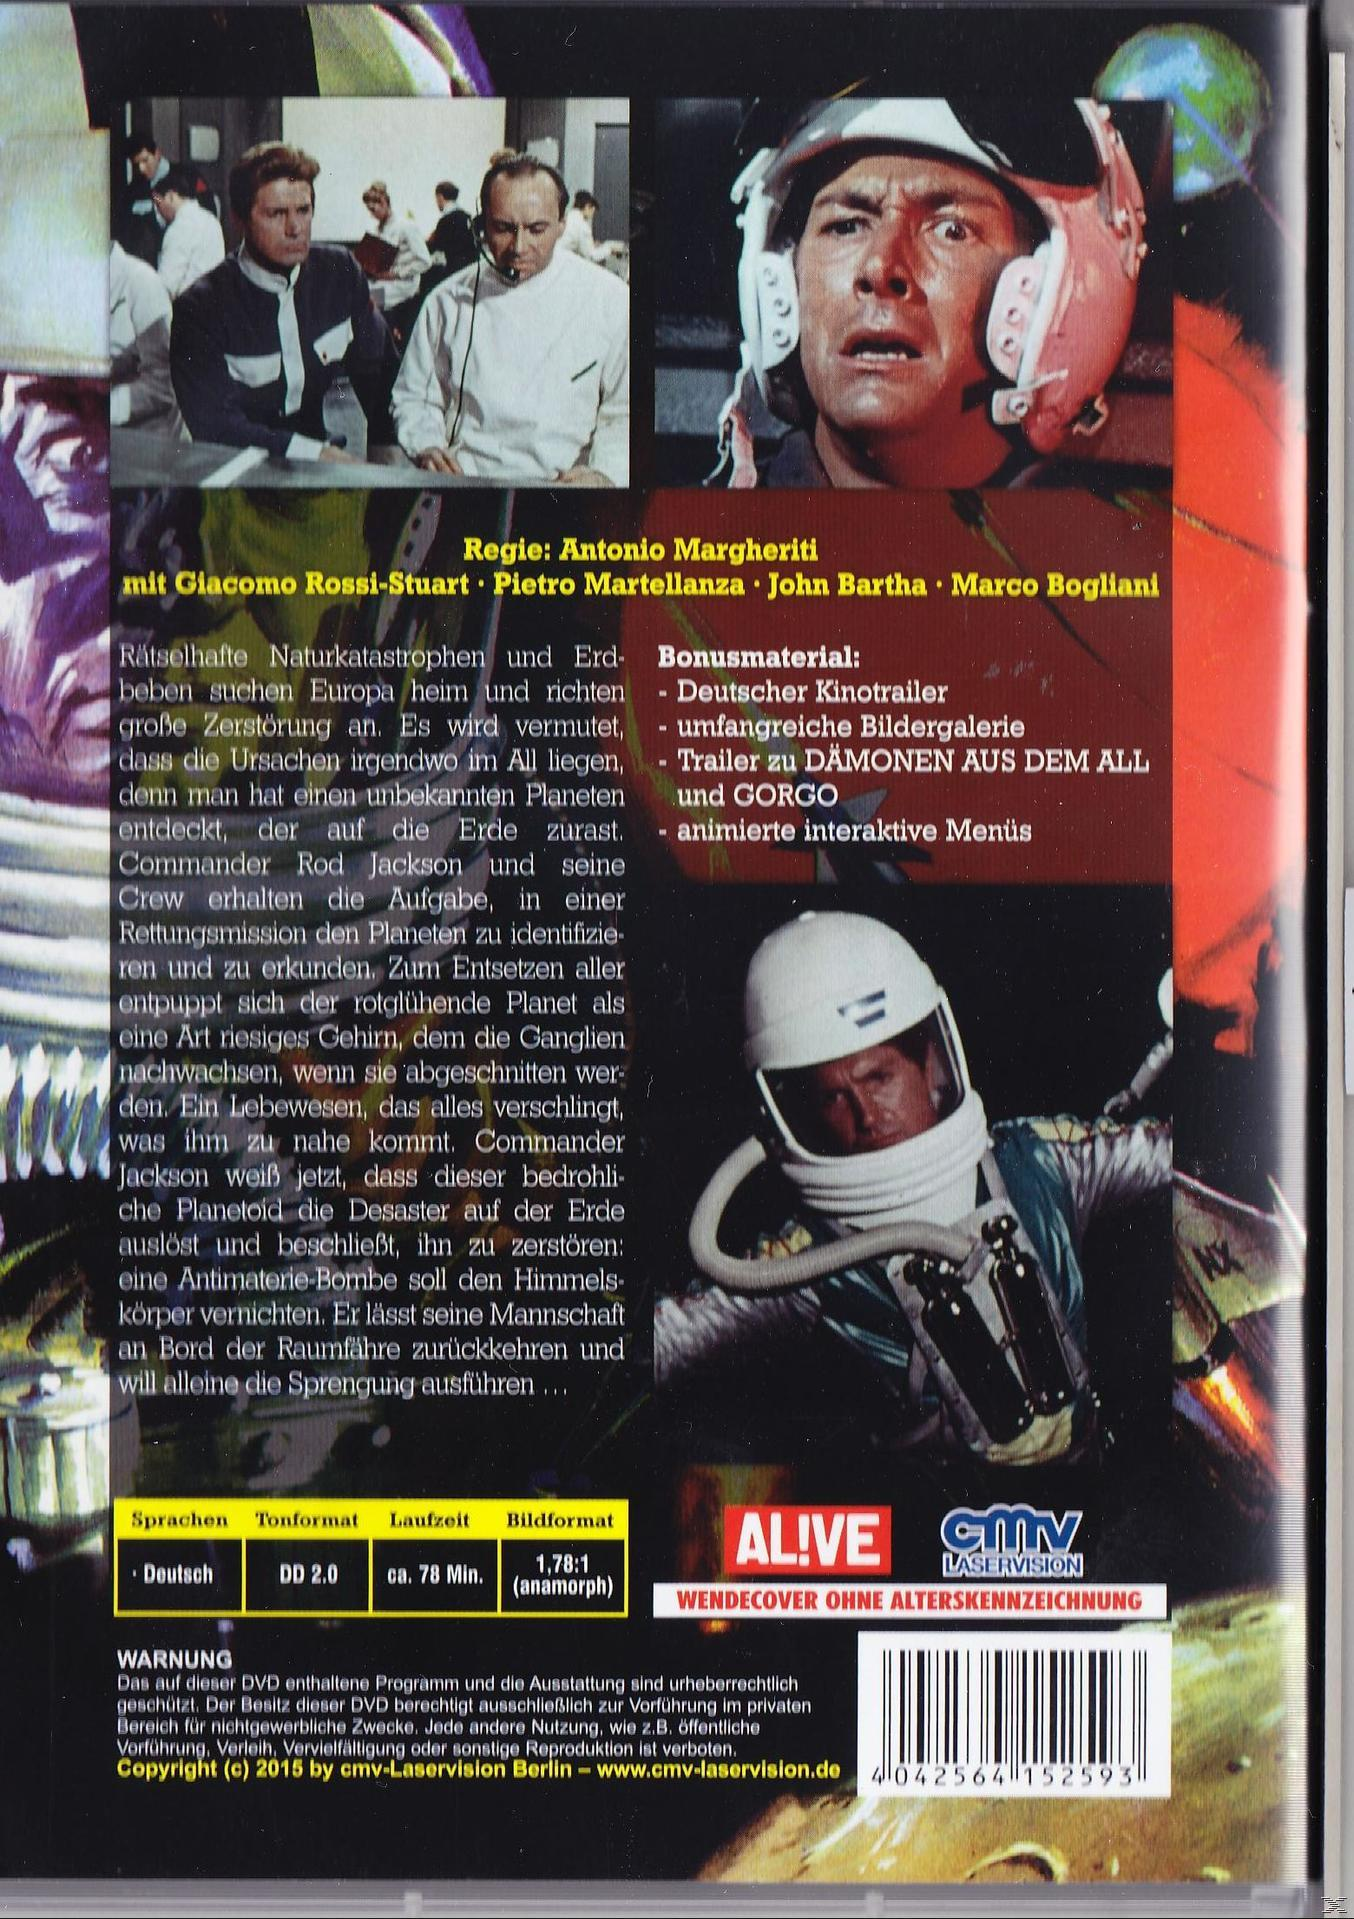 des 3000 - DVD Orion Grauens Raumfahrt